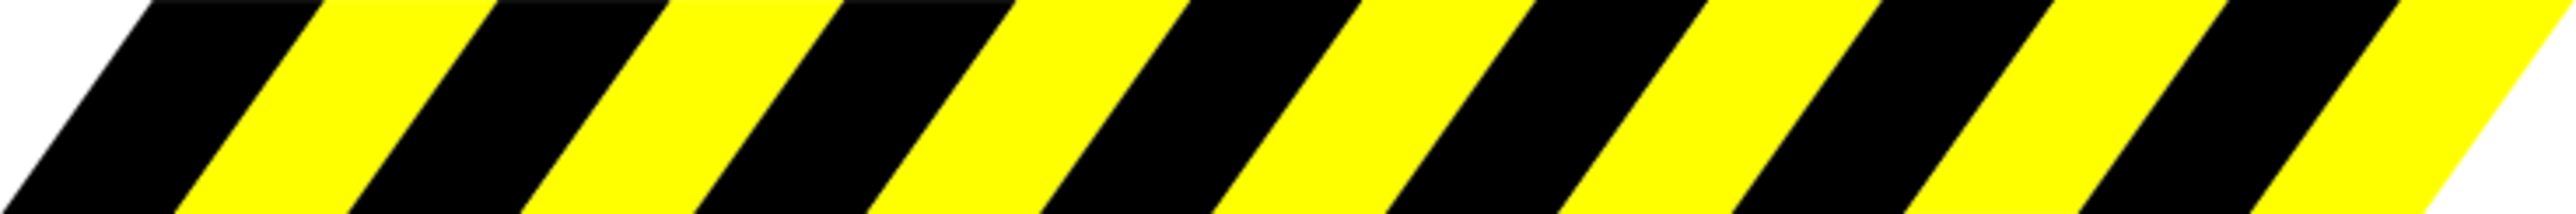 clip art clipart svg black public domain yellow 图标 sign construction pattern warning stripe repeatable 剪贴画 标志 黑色 黄色 花样